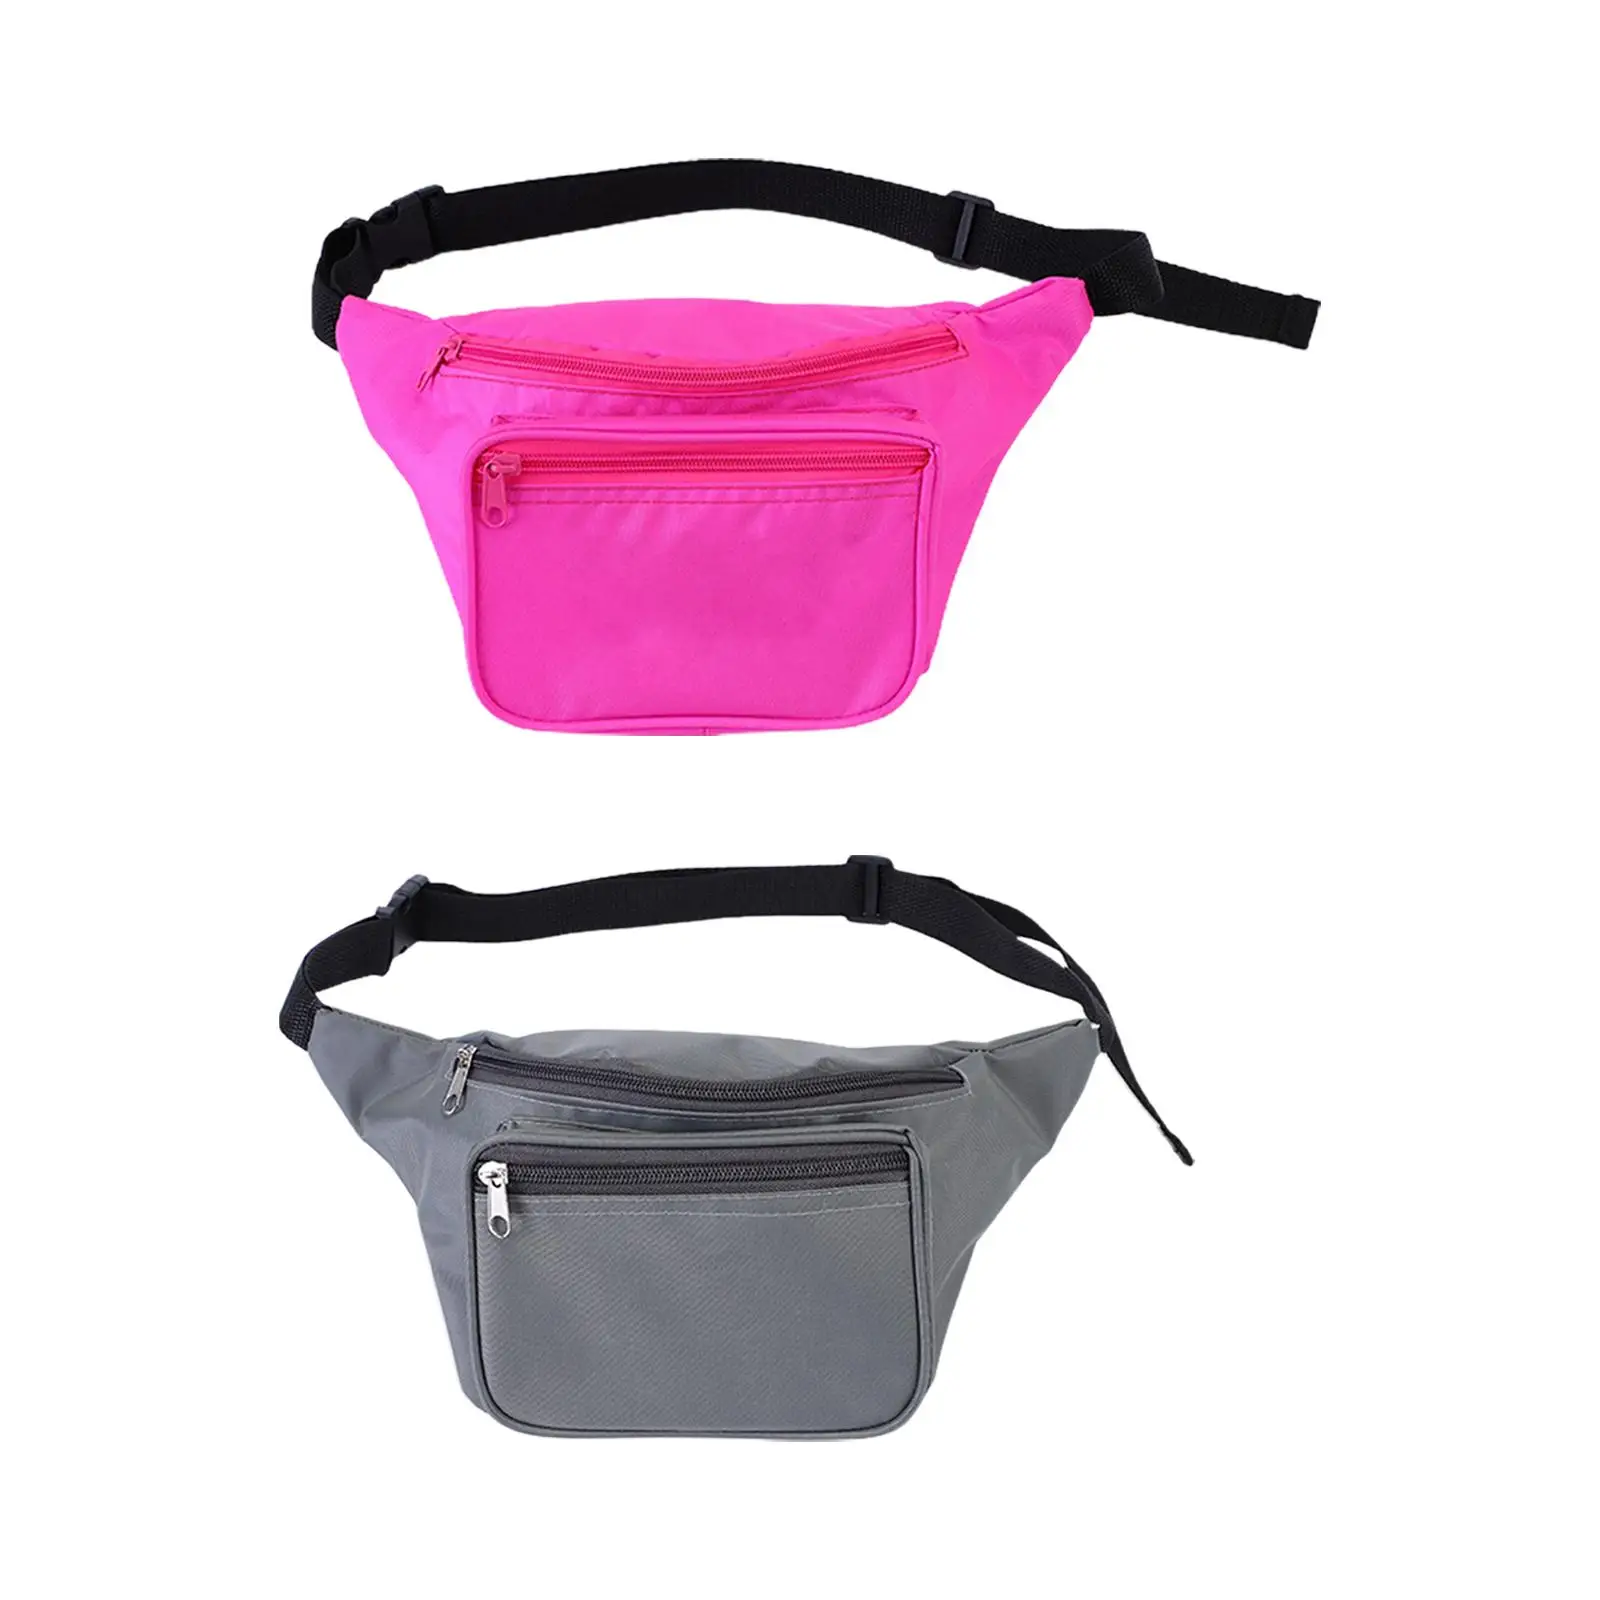 Portable Fanny Pack Purse Wallet Adjustable Belt Casual Crossbody Bag Waist Bag for Running Trekking Camping Women Men Travel